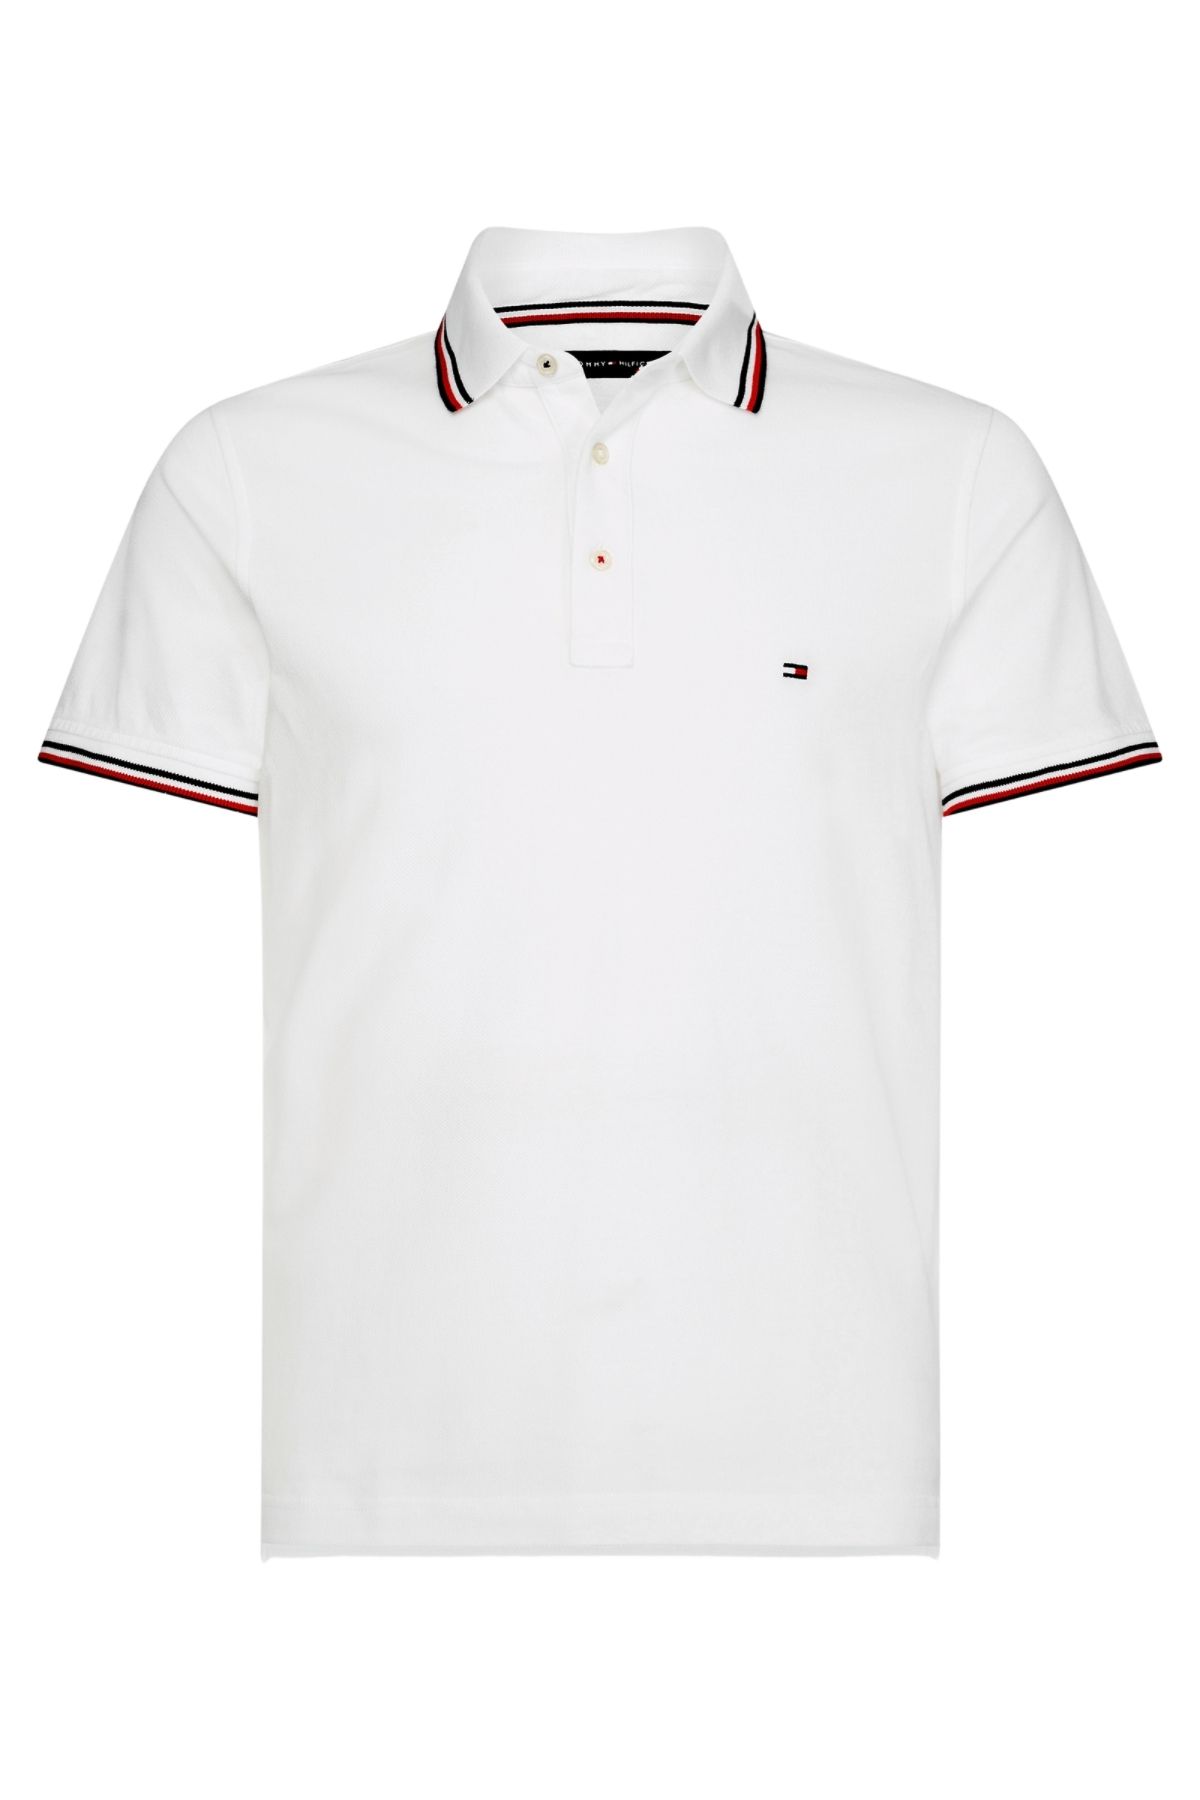 Tommy Hilfiger Erkek Beyaz T-shirt Mw0mw13080ybr-beyaz